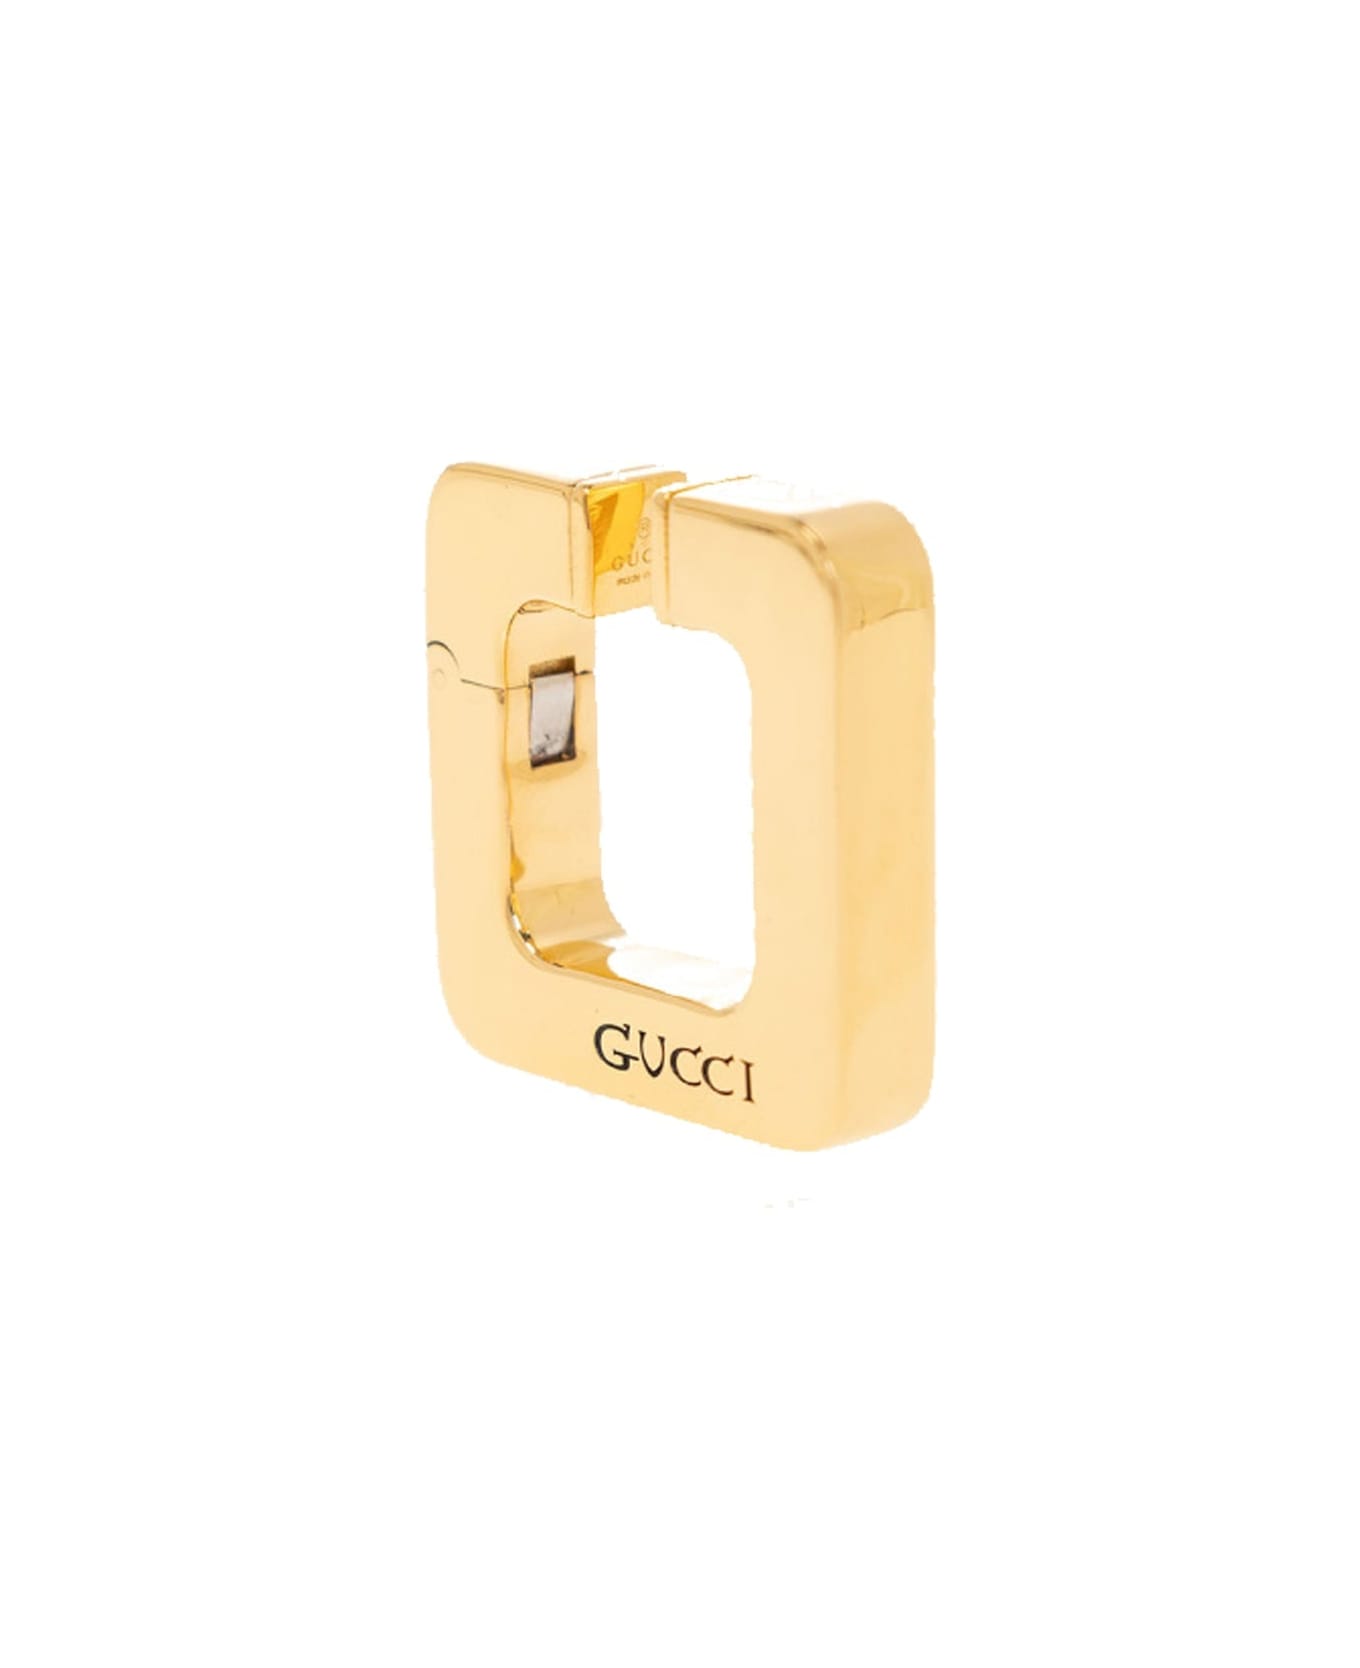 Gucci Logo Cuff Earring - Gold イヤリング